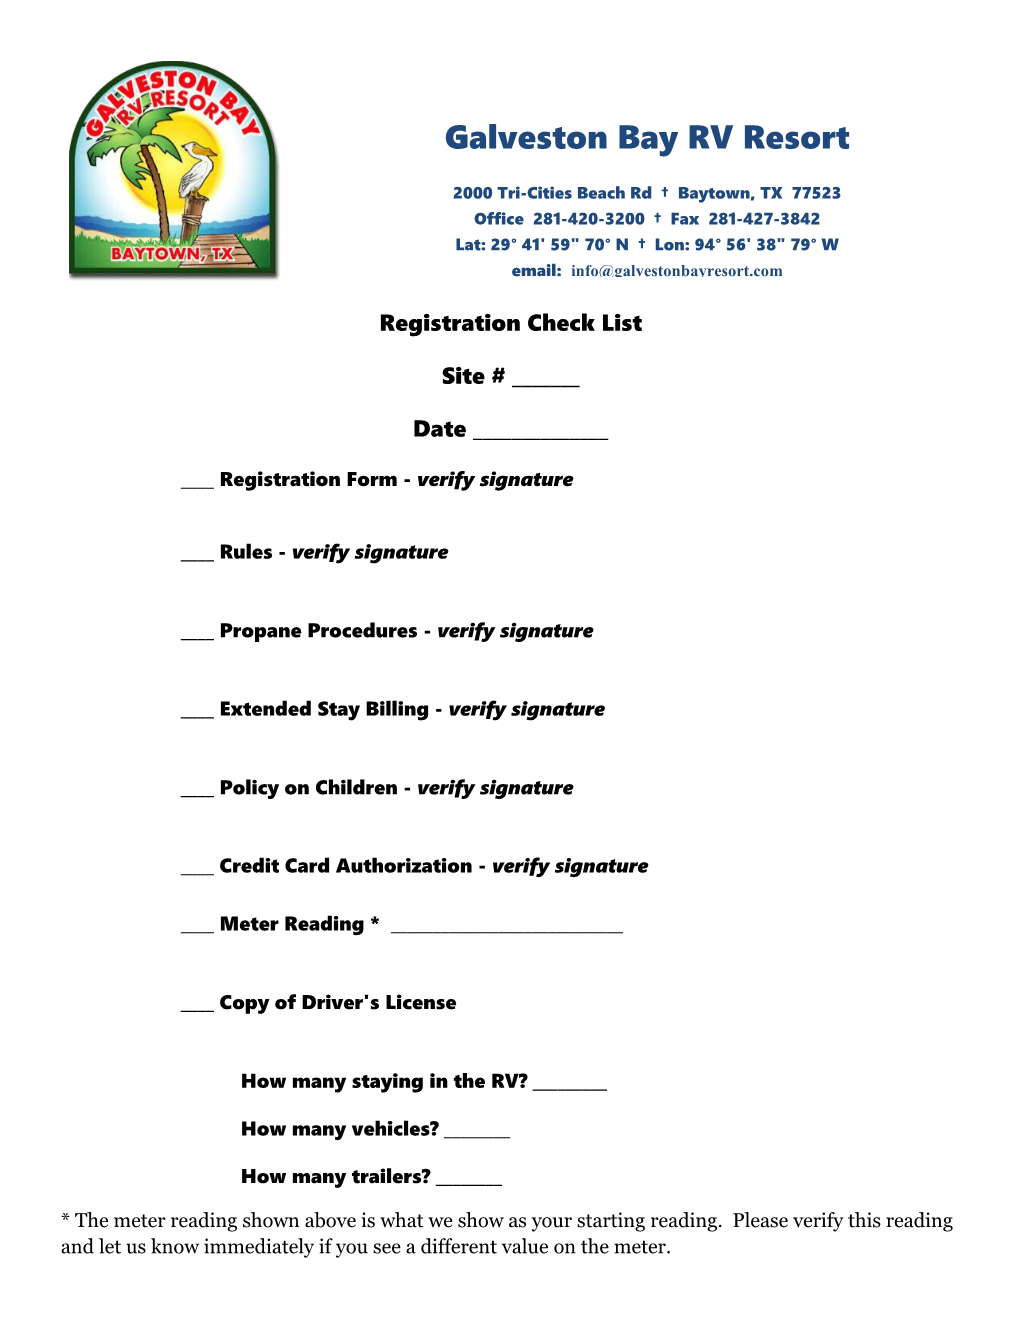 Registration Check List